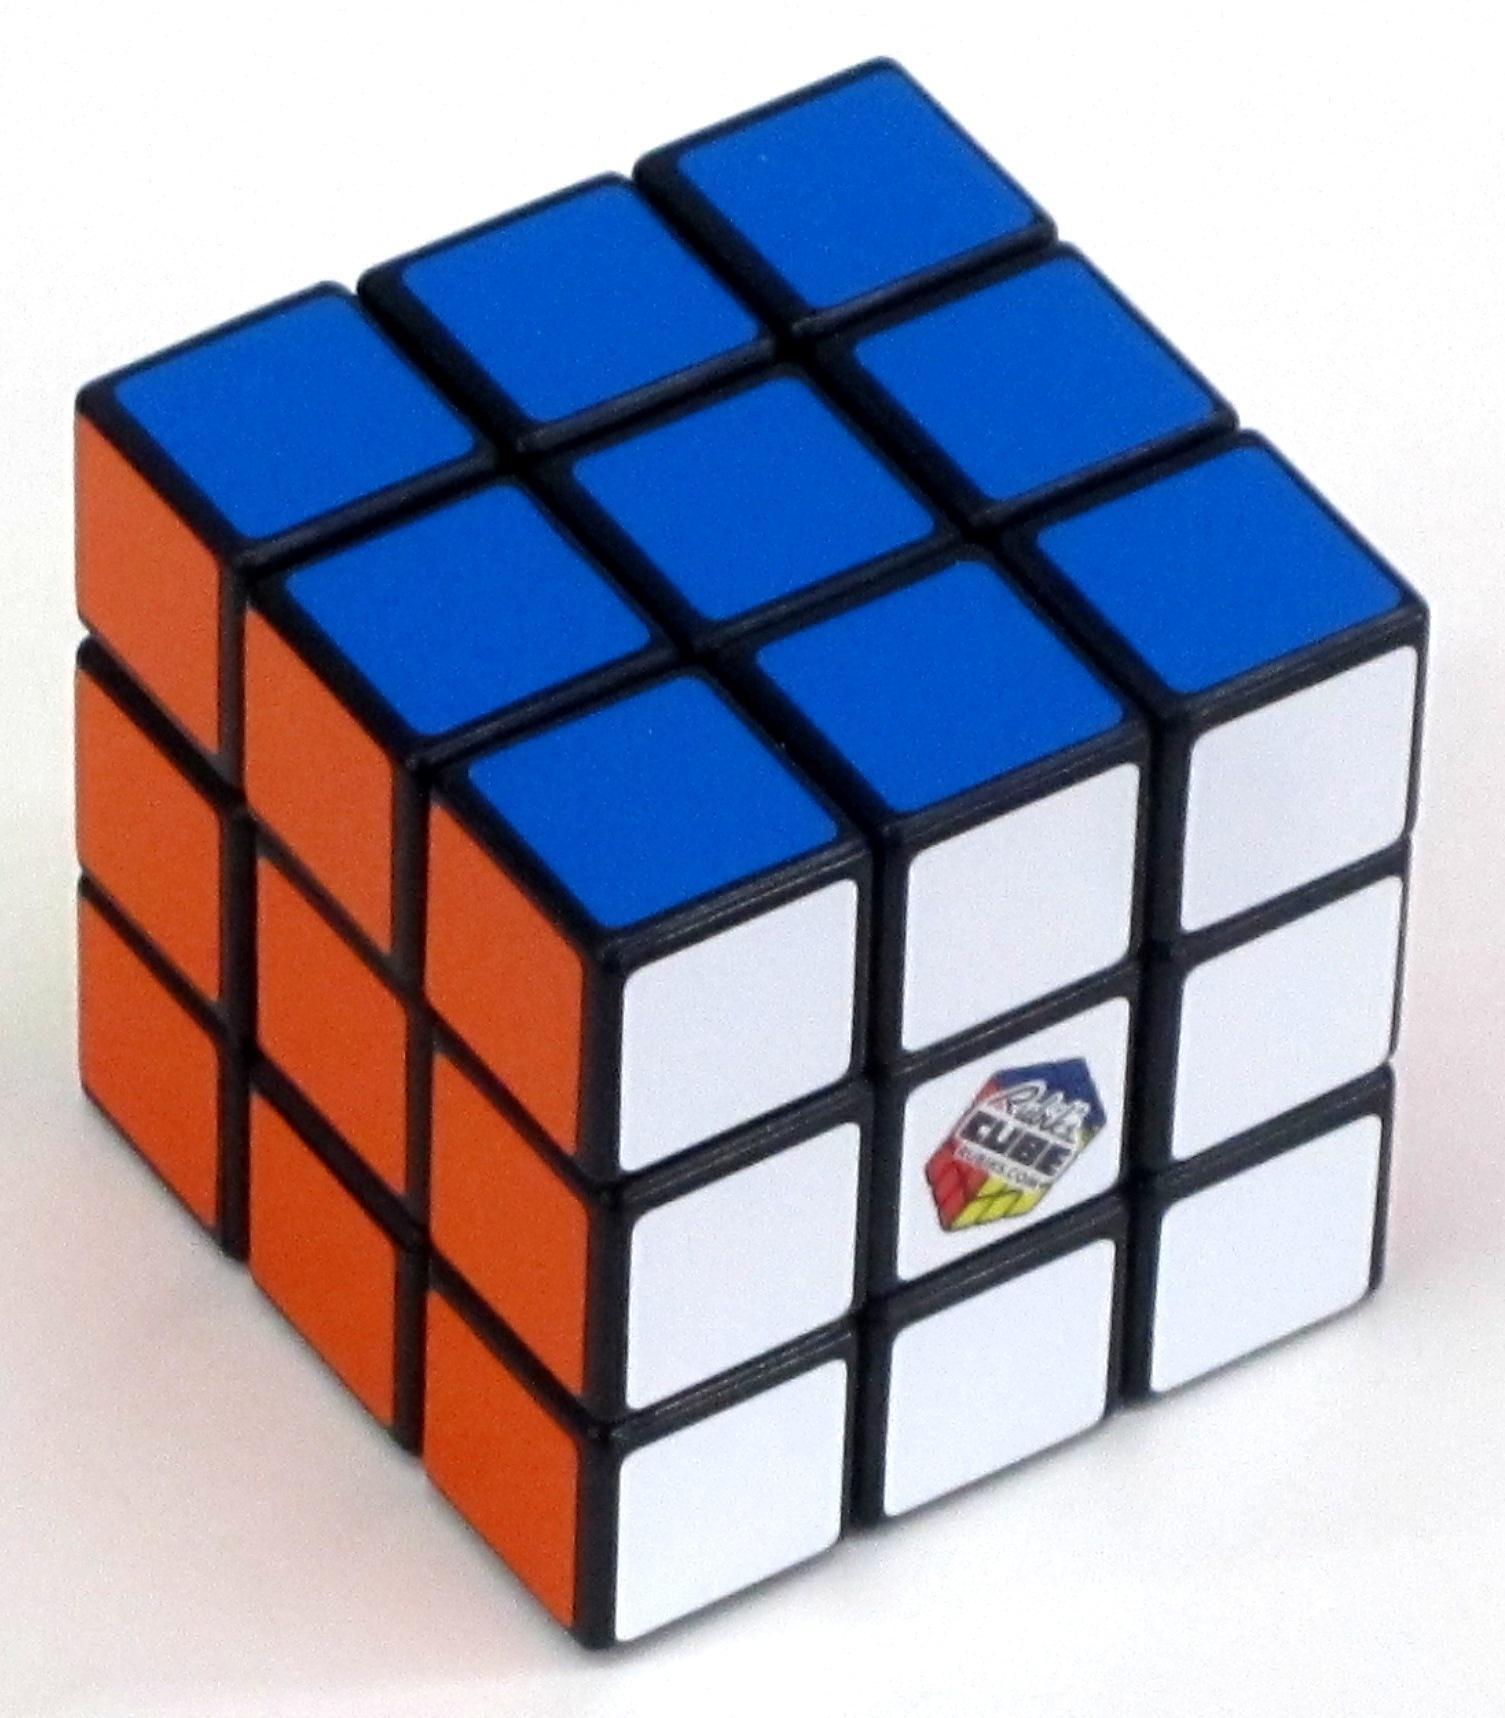 Rubik's Cube The Original Challenging Puzzle